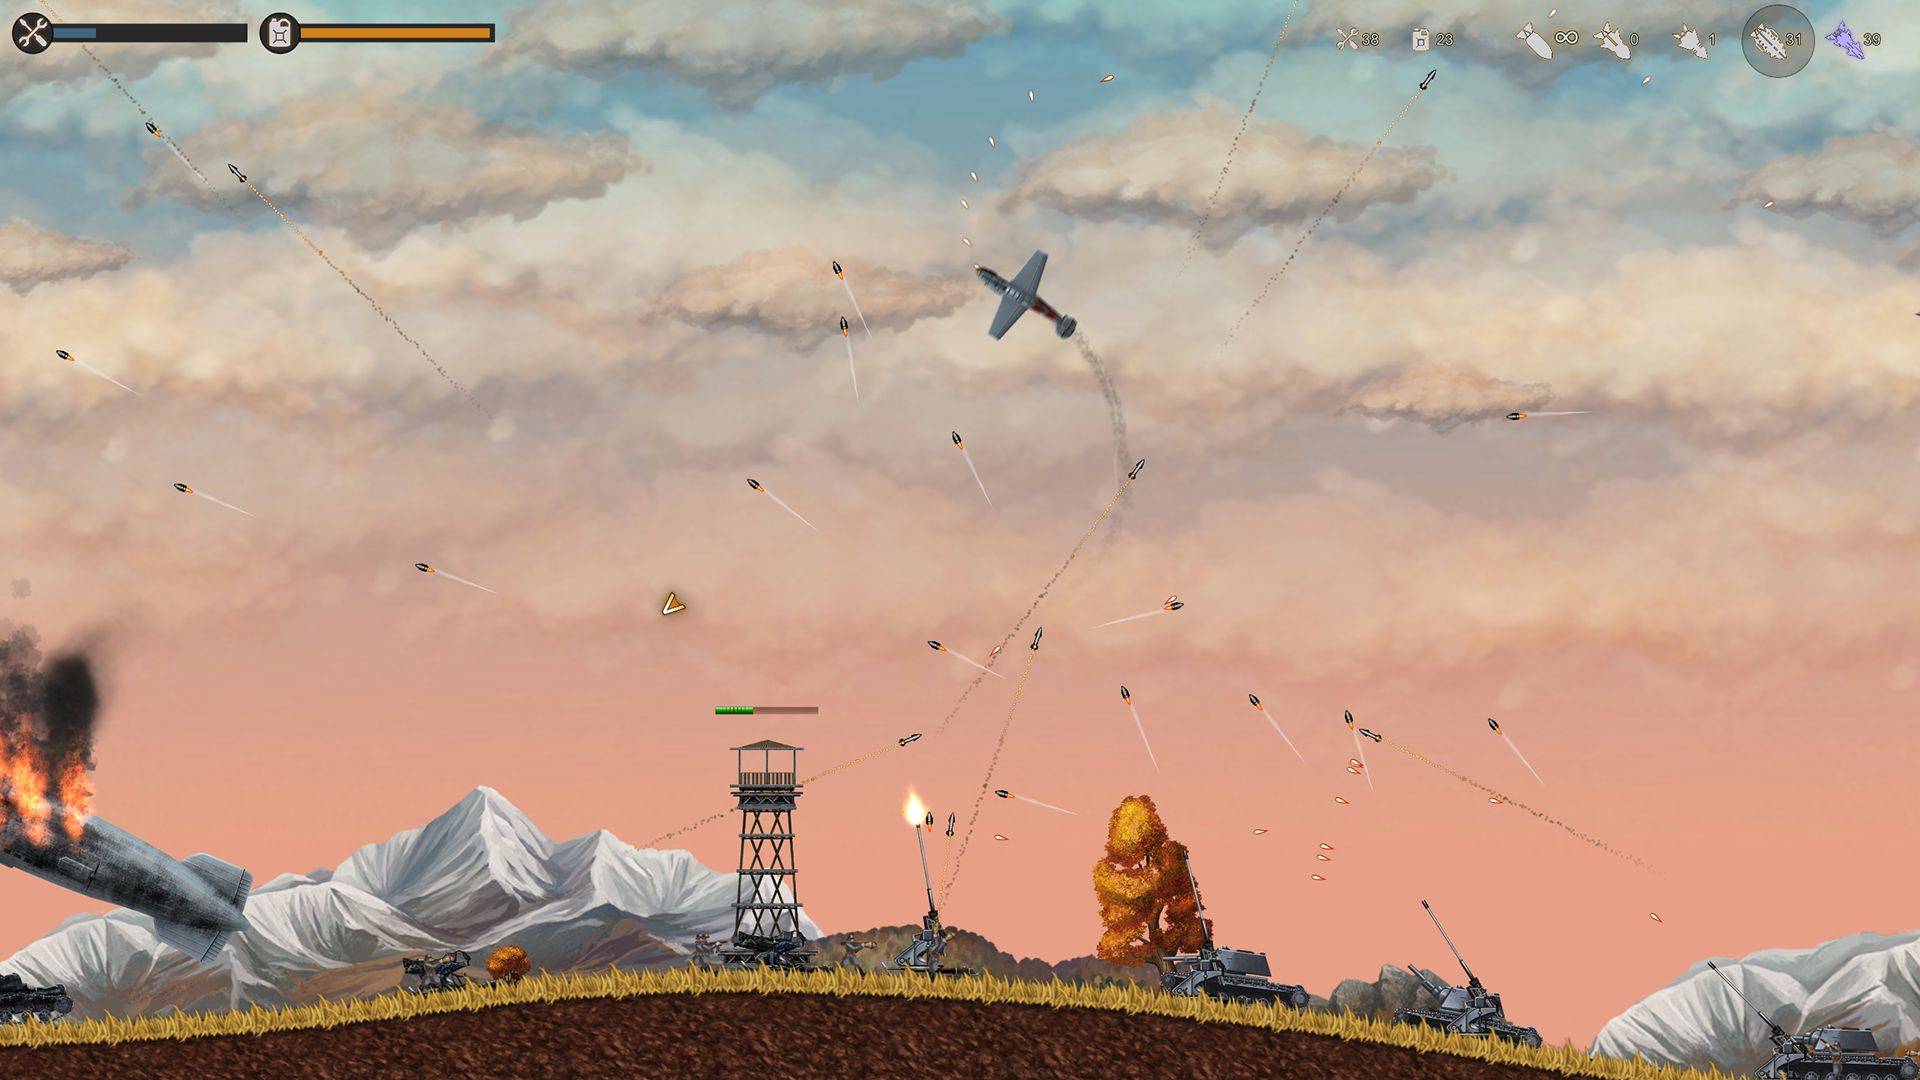 Aircraft Evolution - Android game screenshots.